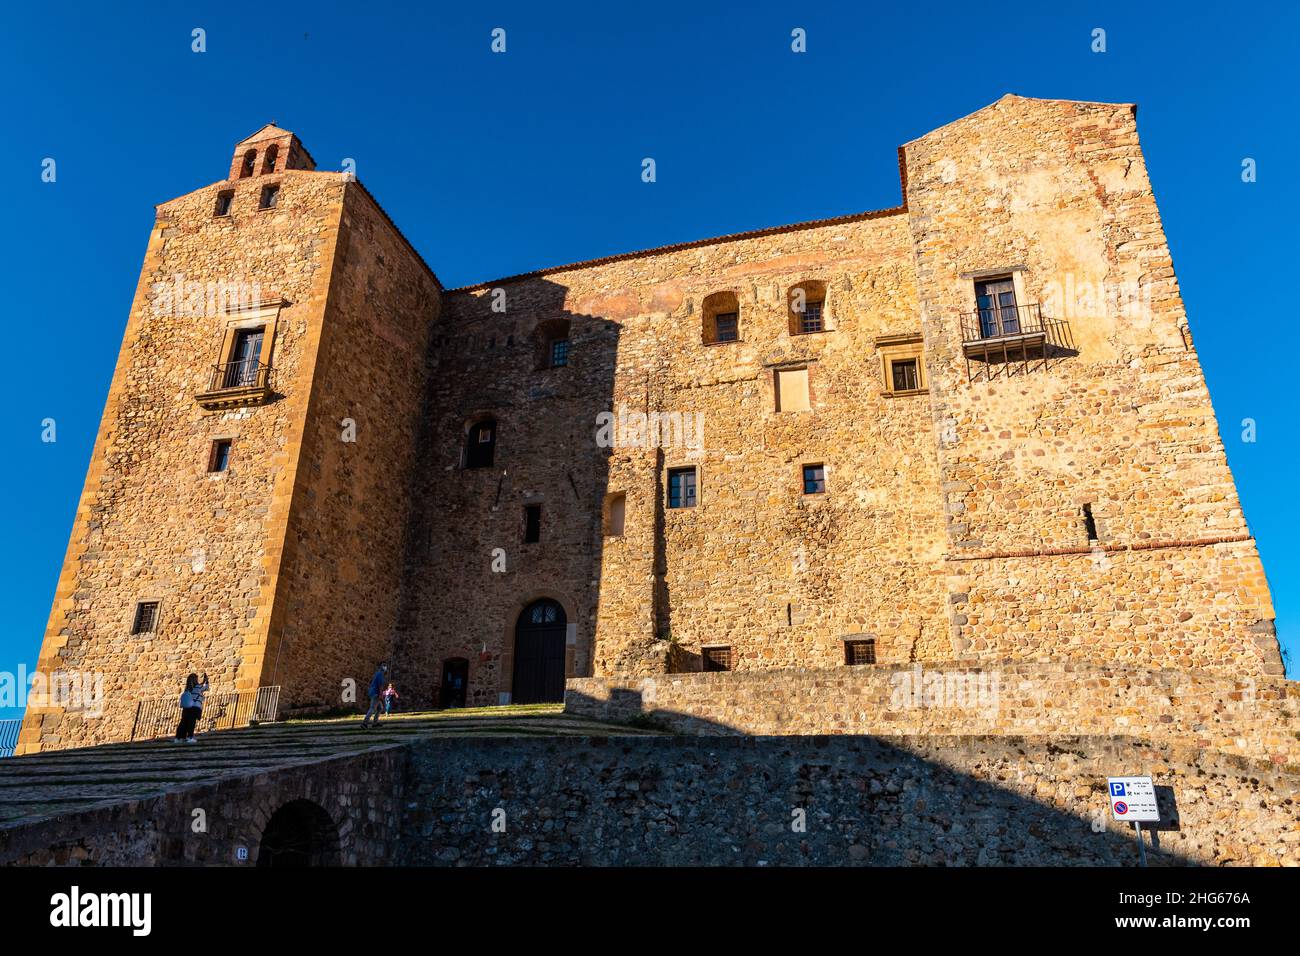 Castelbuono castle illuminated by the afternoon sunlight, Sicily, Italy Stock Photo